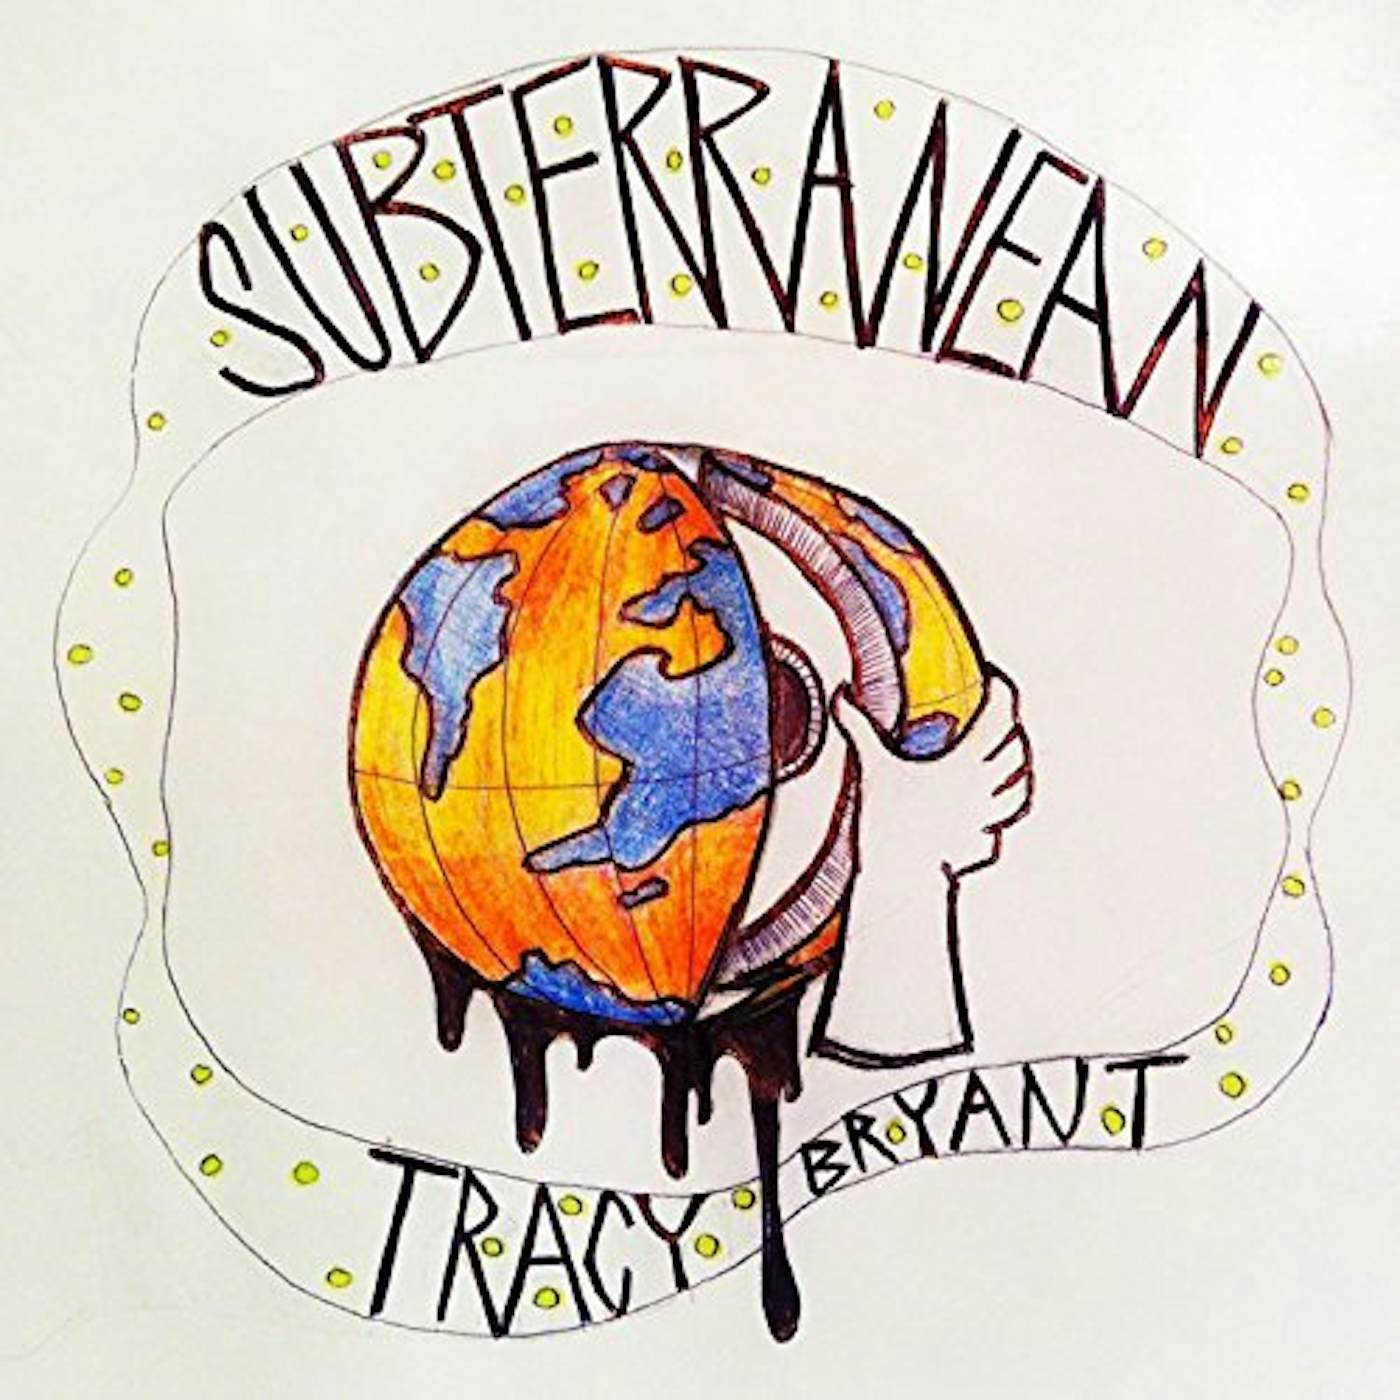 Tracy Bryant SUBTERRANEAN CD